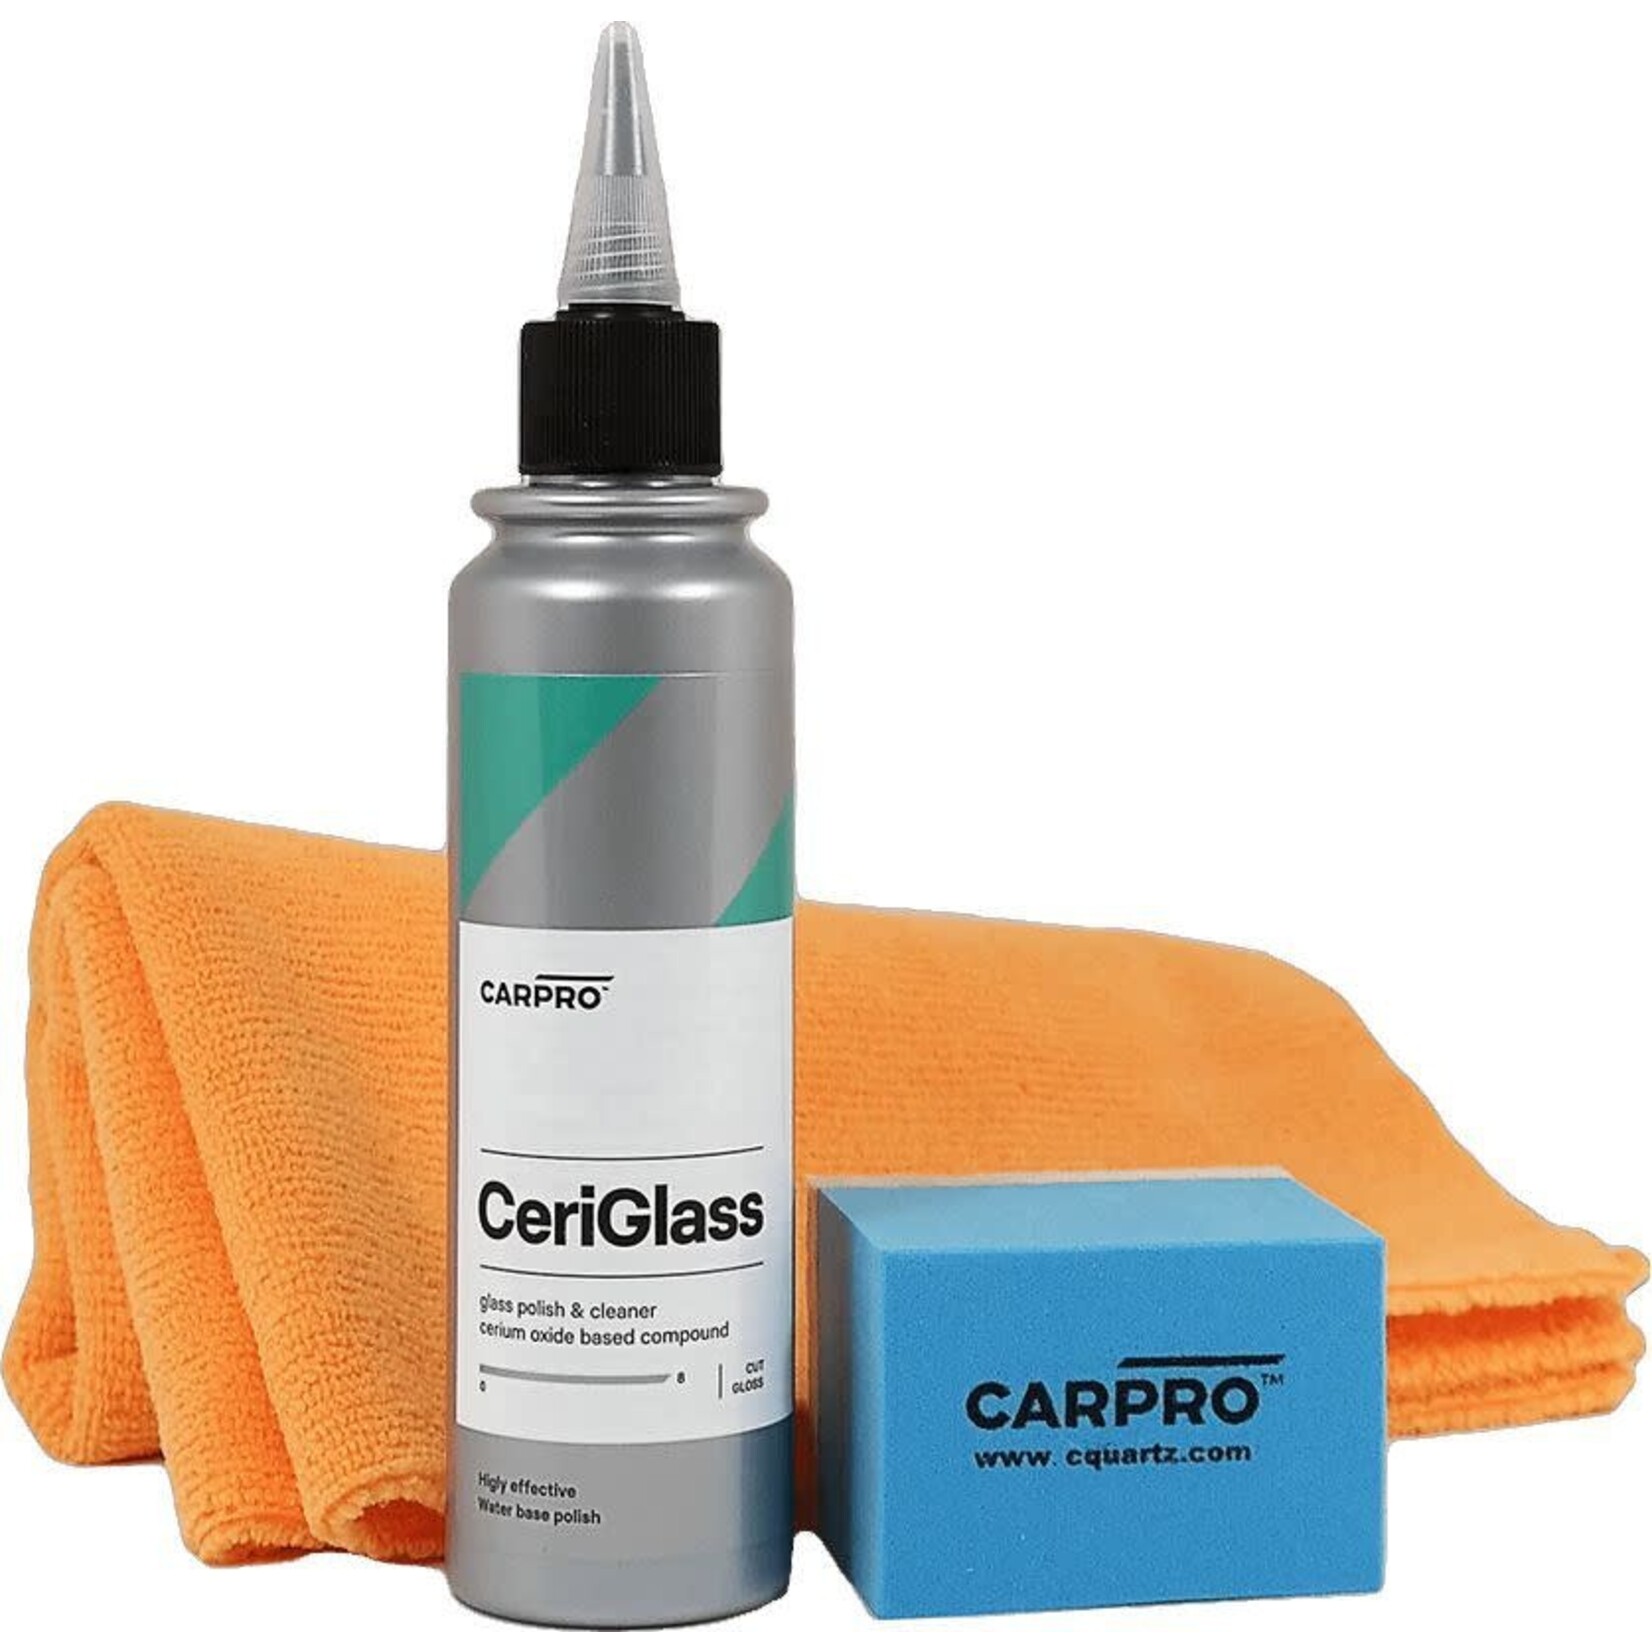 CarPro Carpro - CeriGlass Polish Kit (150ml)